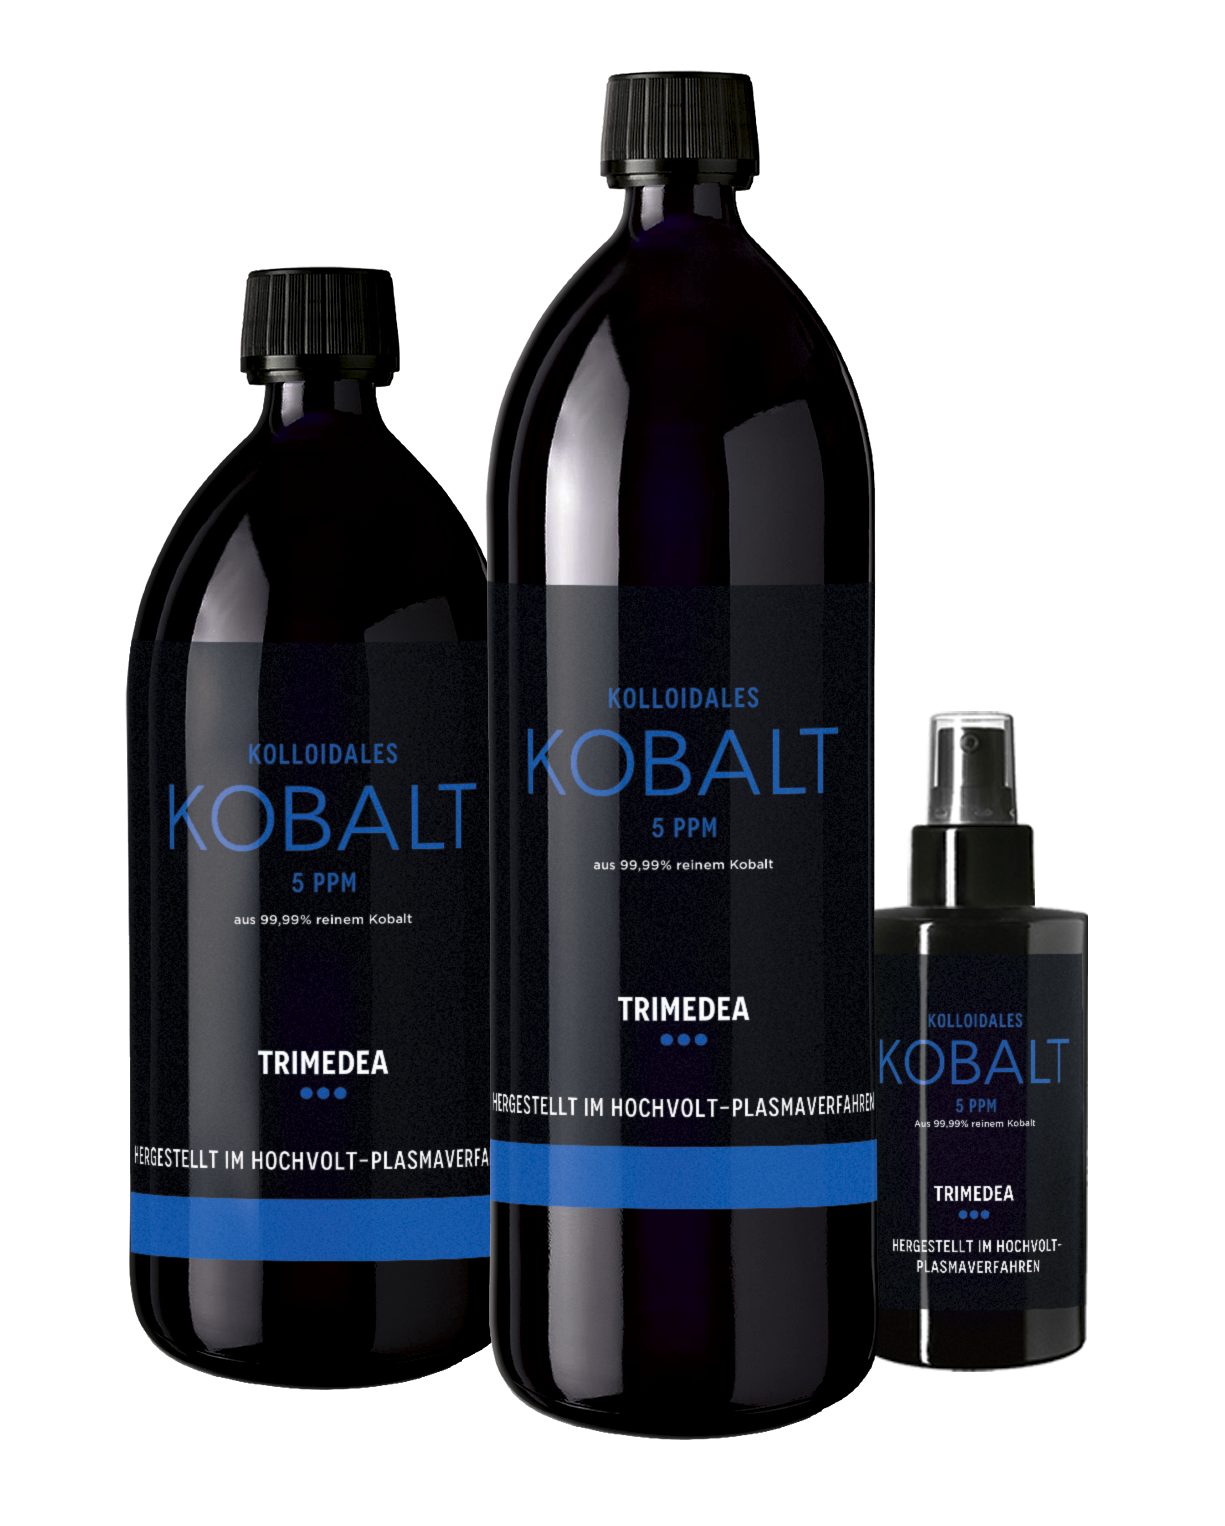 Colloidal cobalt bioavailable vitamin B12 cobalamin